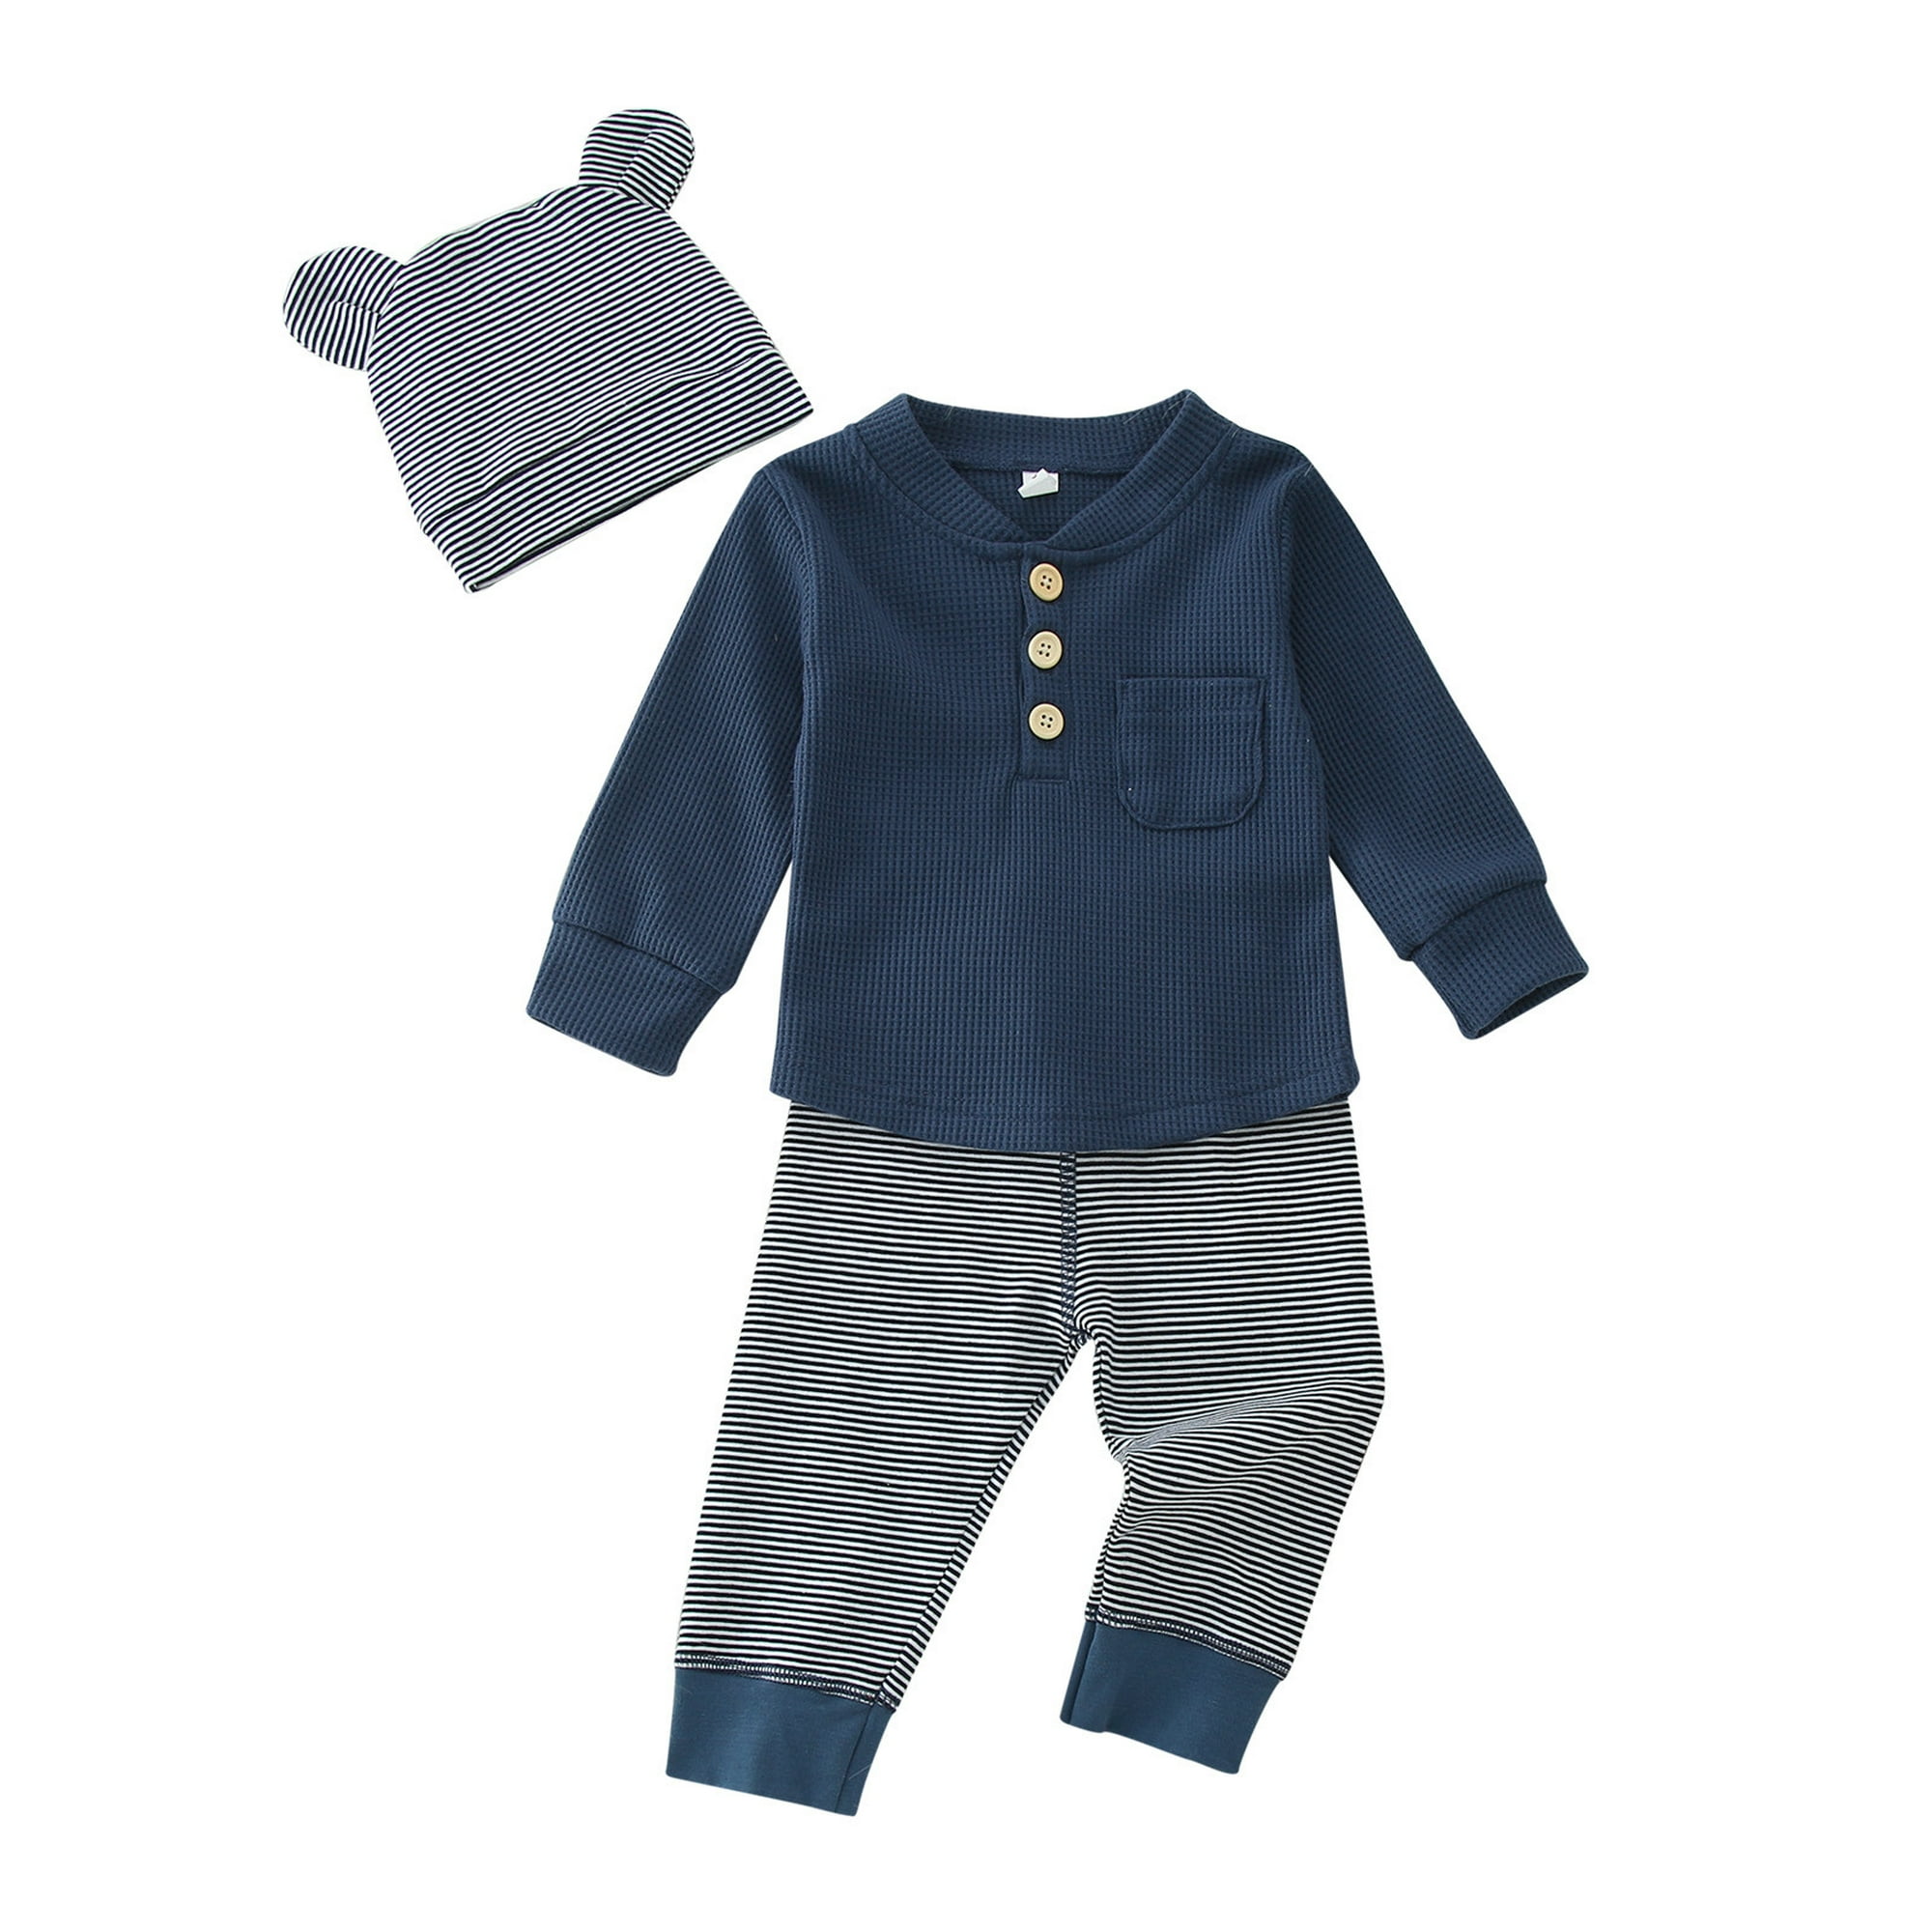 Gibobby Conjunto deportivo para niños Ropa para bebé recién nacido, infantil,  floral pantalones sombrero, ropa para niña pequeña(Gris,0-3 Meses)